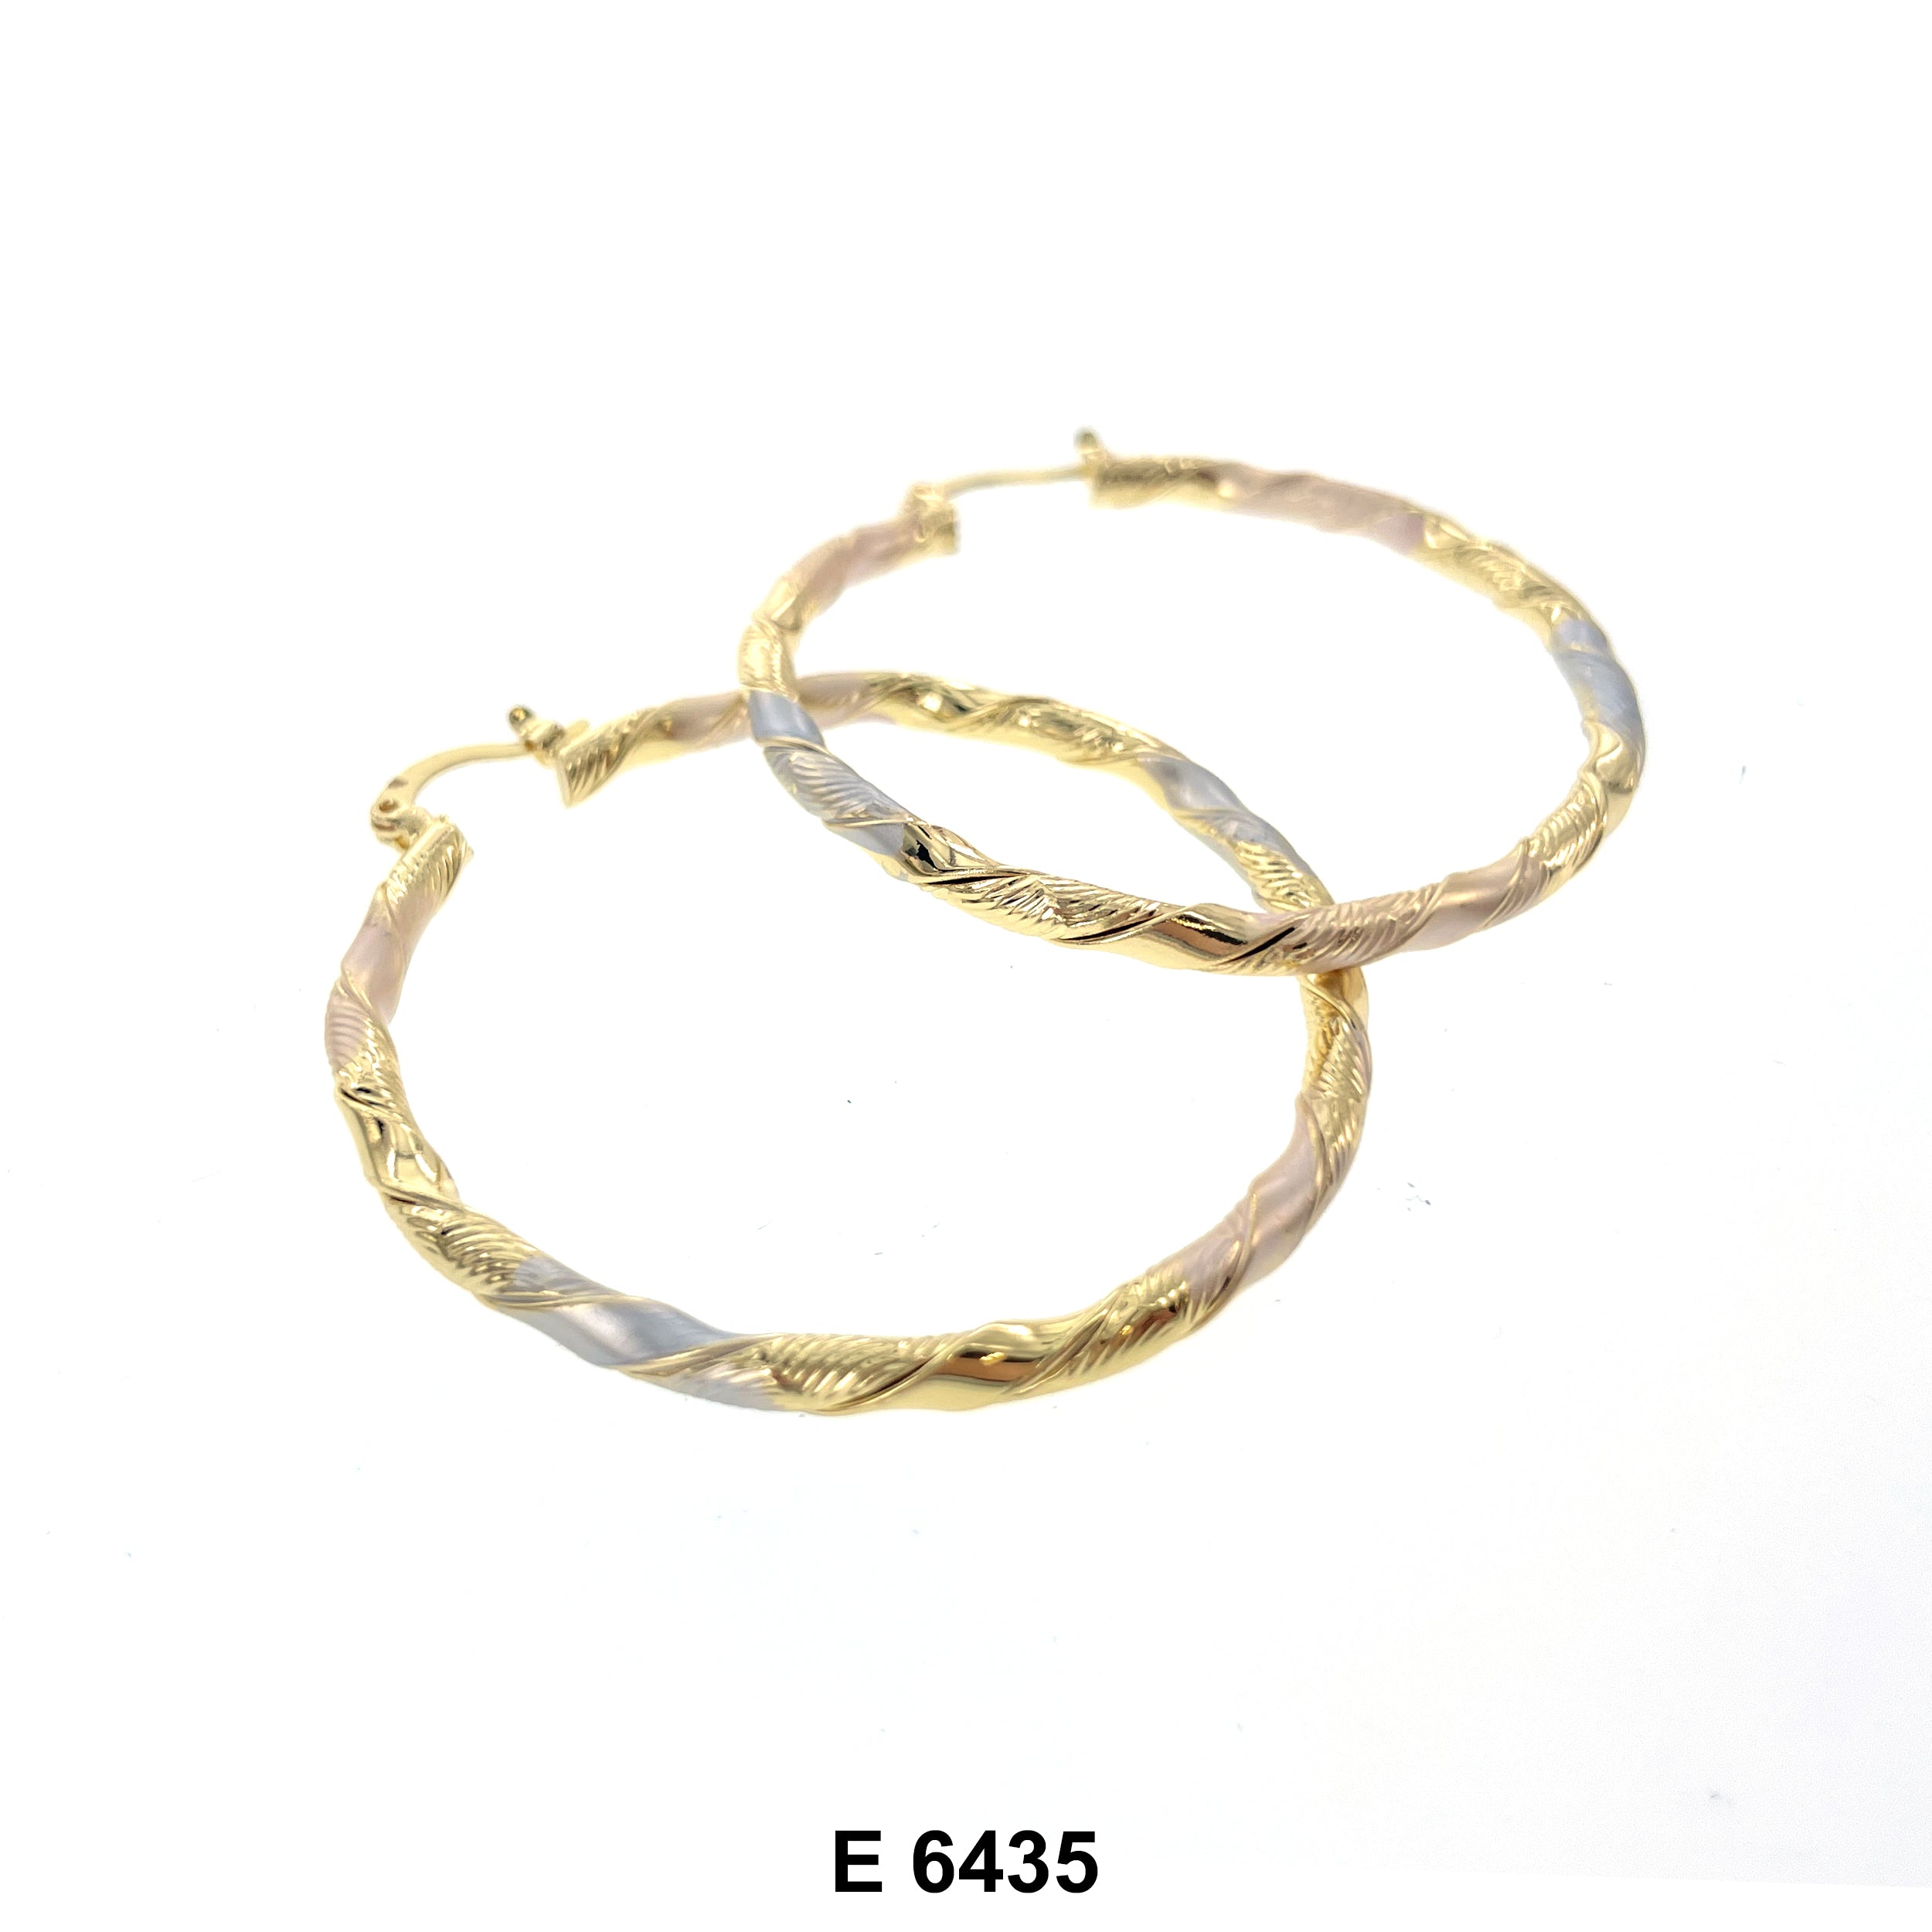 Engraved Hoop Earrings E 6435